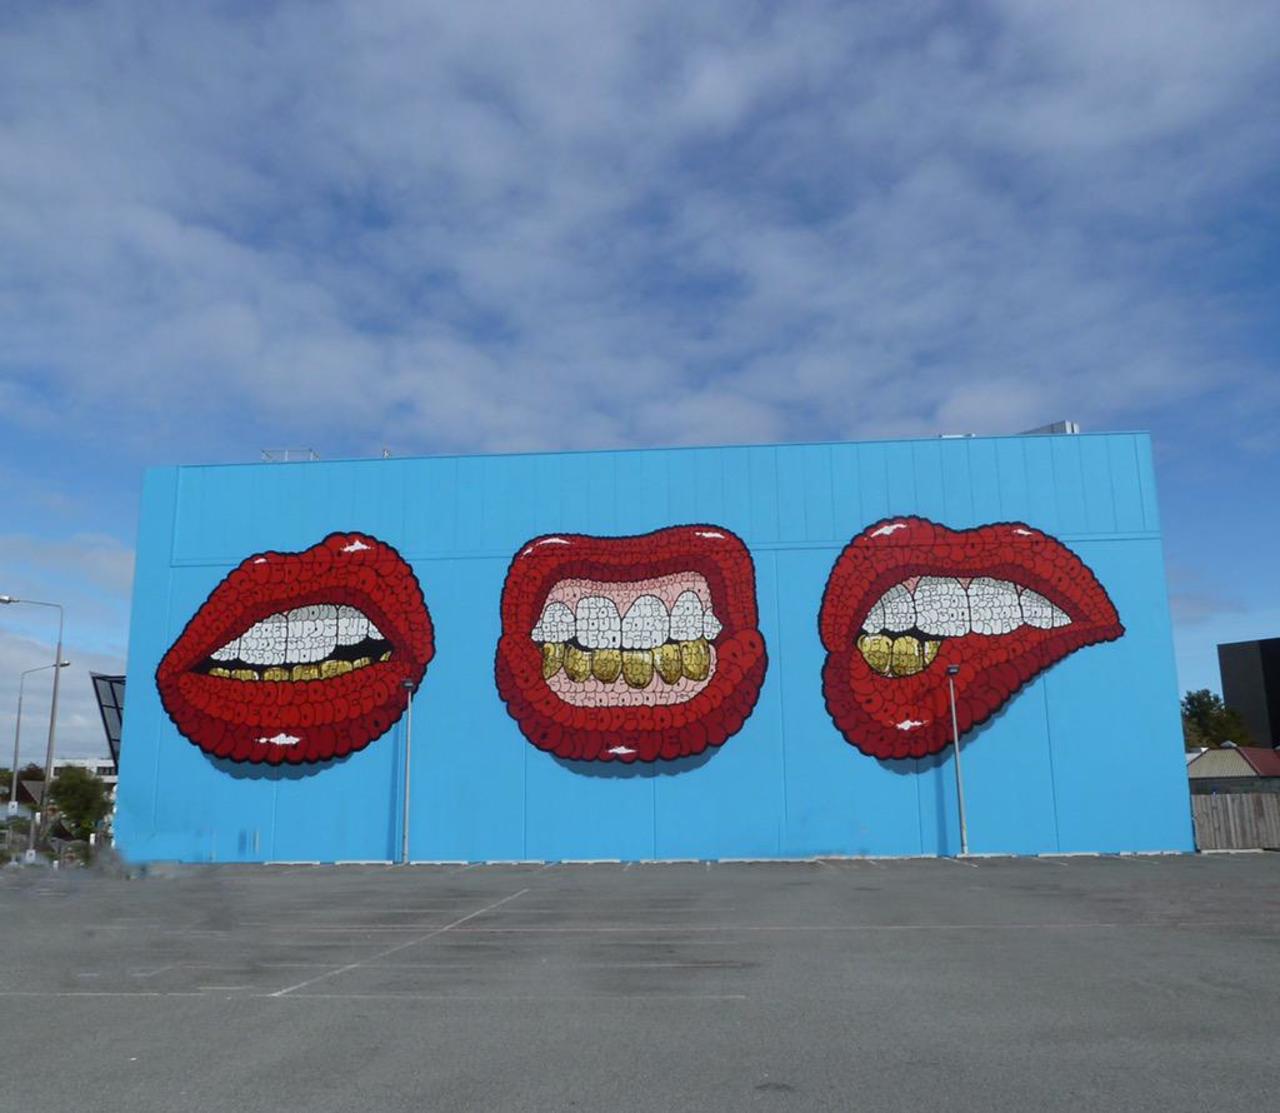 French artist #tilt Feb 2015 for #SpectrumStreetart festival in Christchurch New Zealand #streetart #mural #graffiti http://t.co/Llun5RArWJ